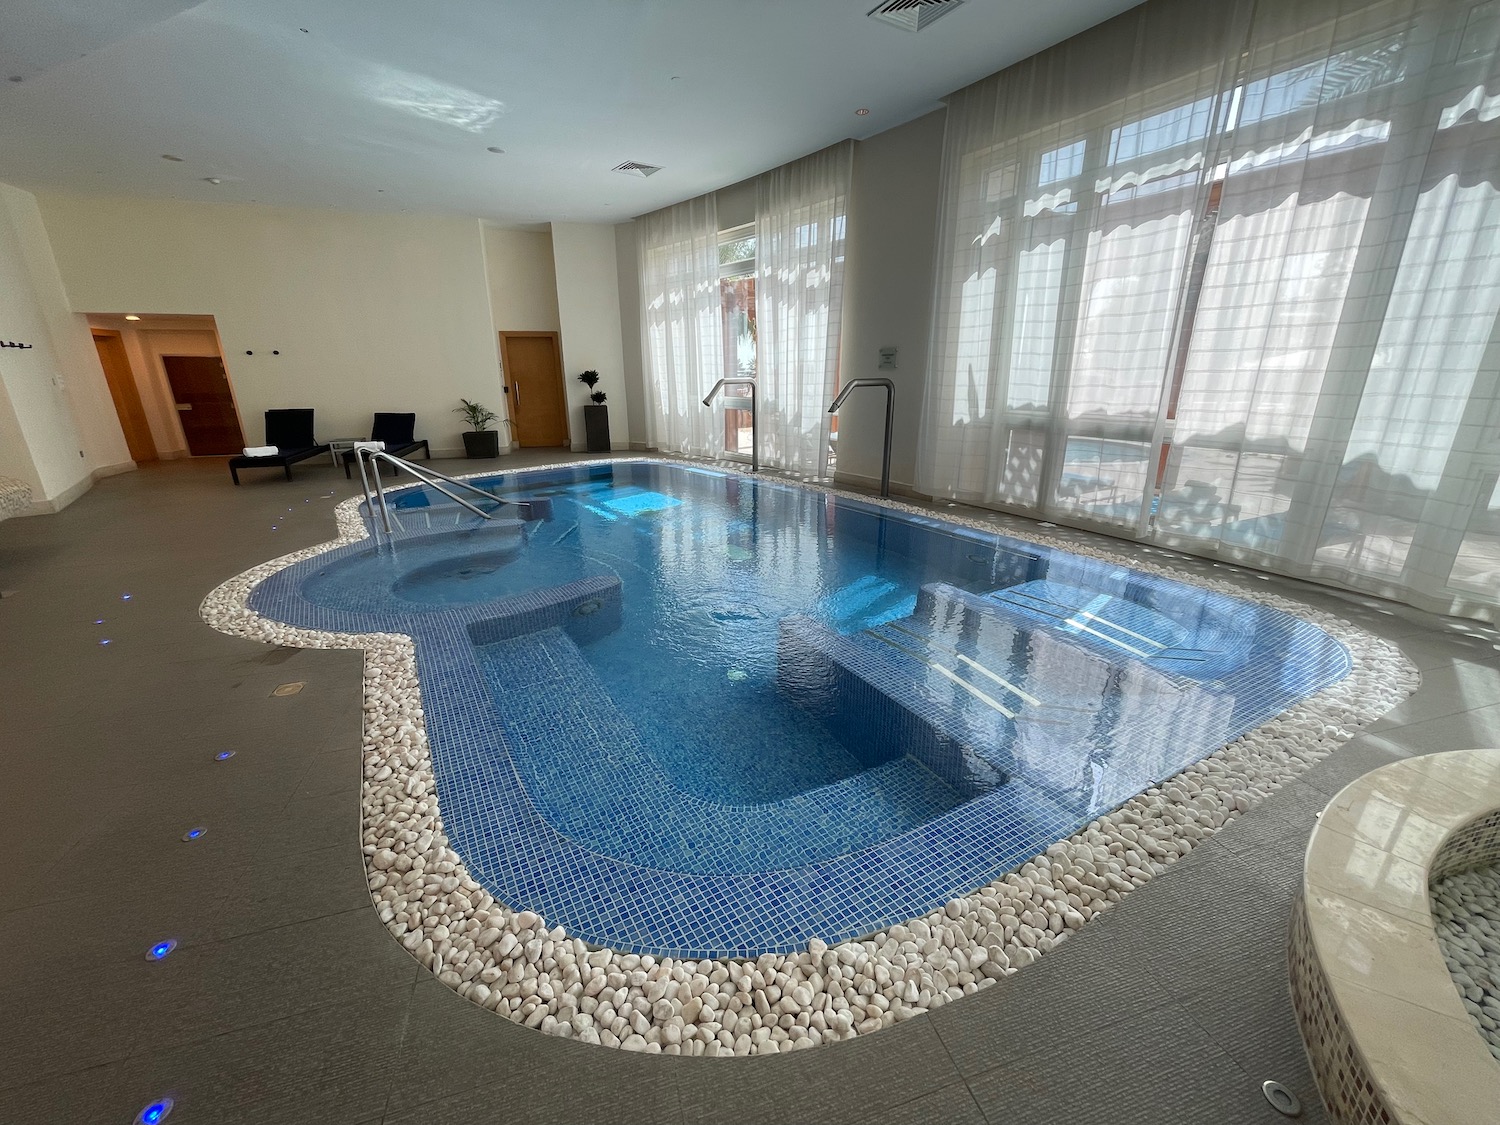 a swimming pool inside a room